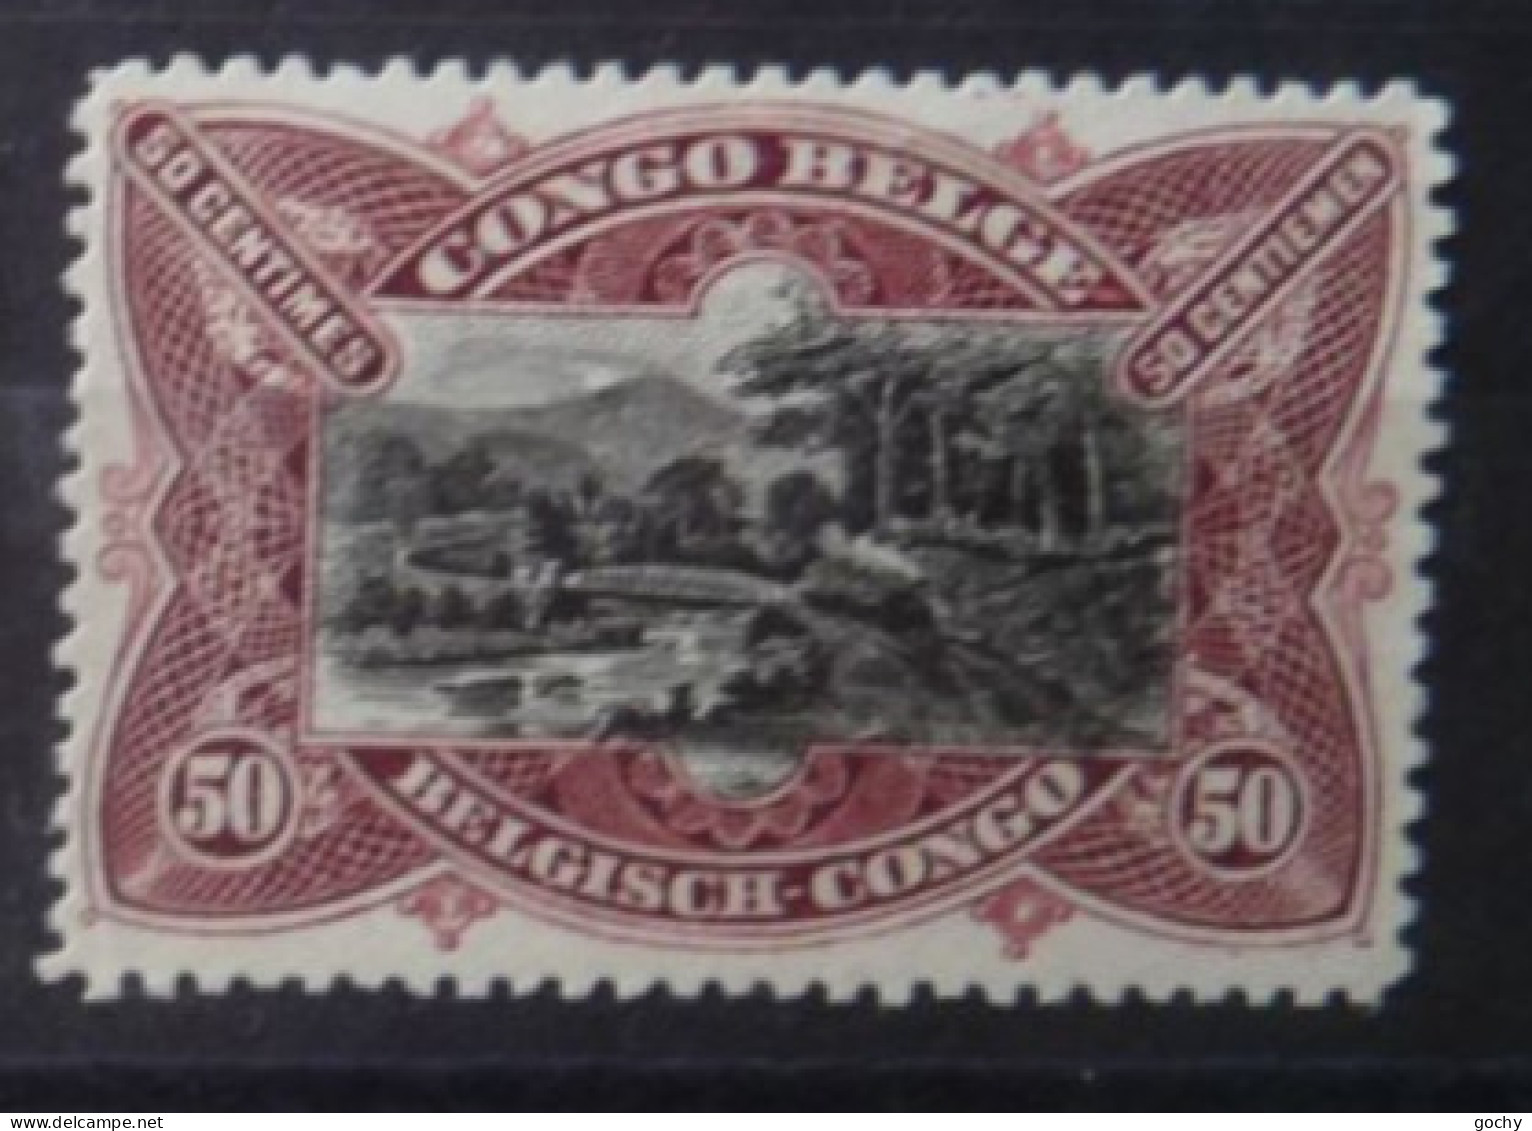 Belgian Congo Belge - 1915  : N° 69 (*)  - Cote: 10,00€ - Neufs